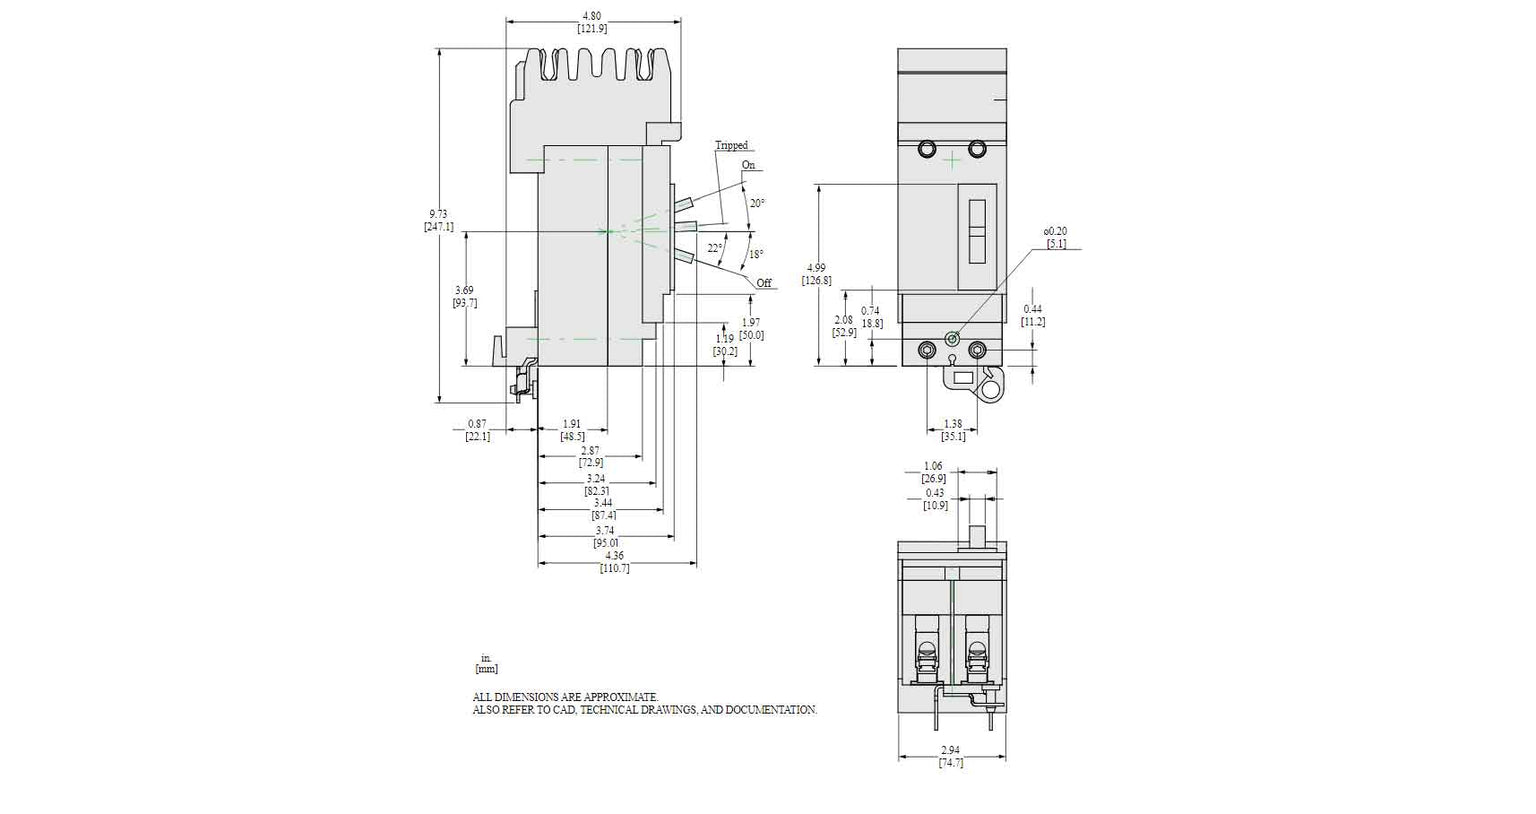 HDA260804 - Square D - Molded Case Circuit Breakers